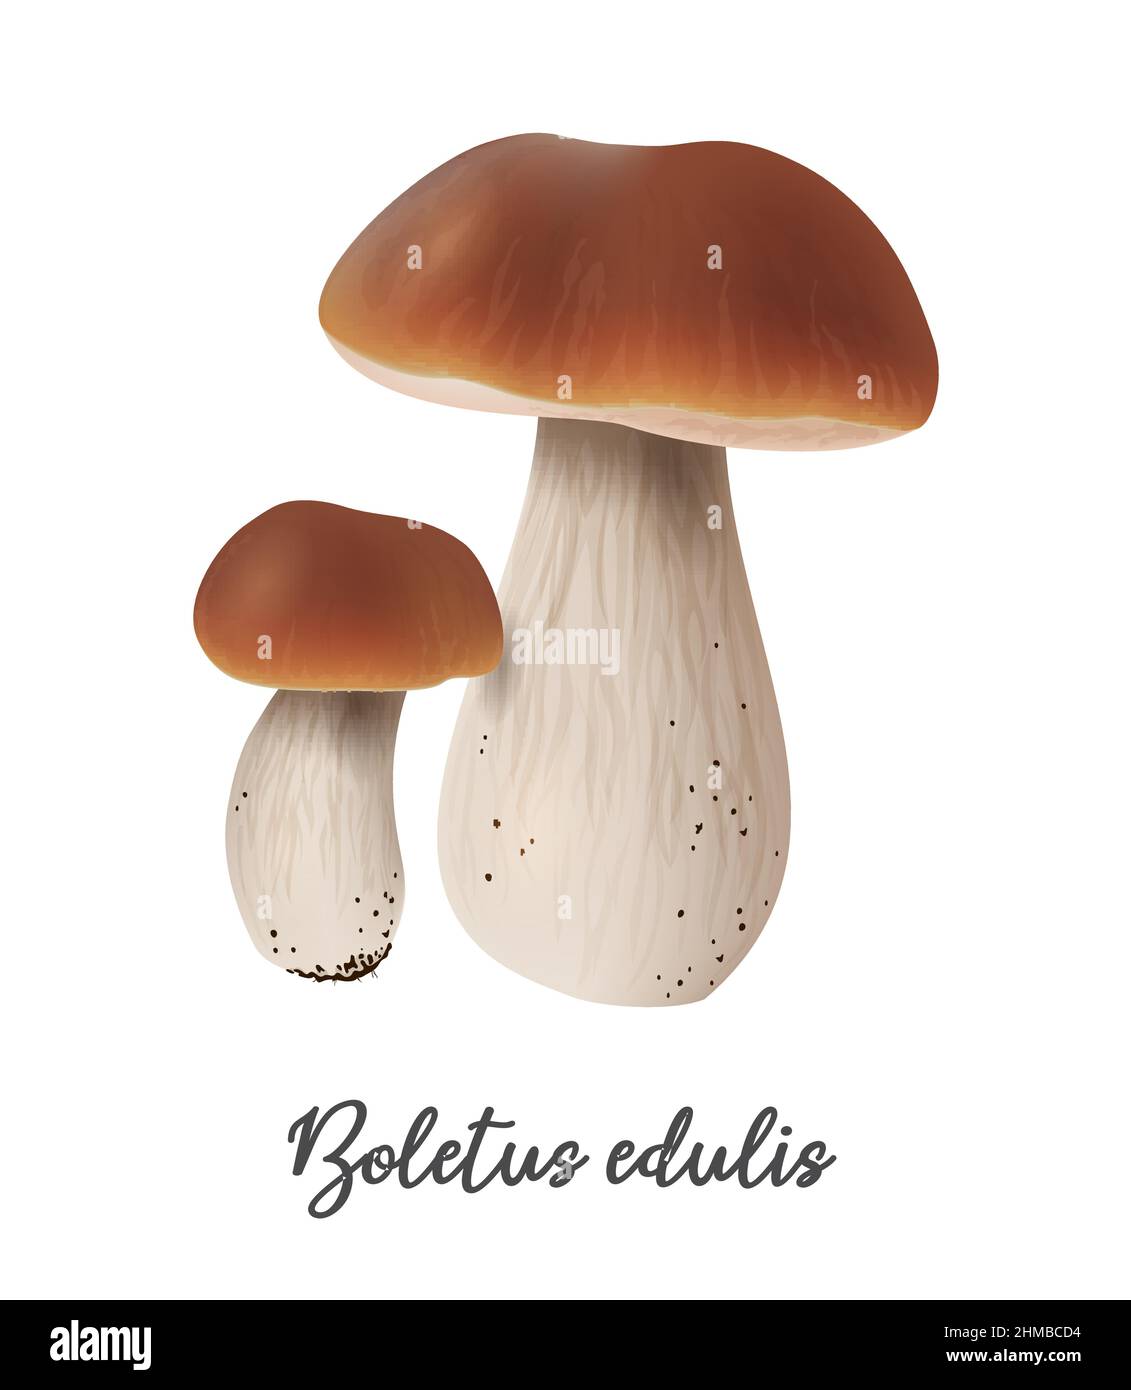 Boletus Edulis Mushroom on white background, natural food ingredient, realistic vector illustration close-up Stock Vector